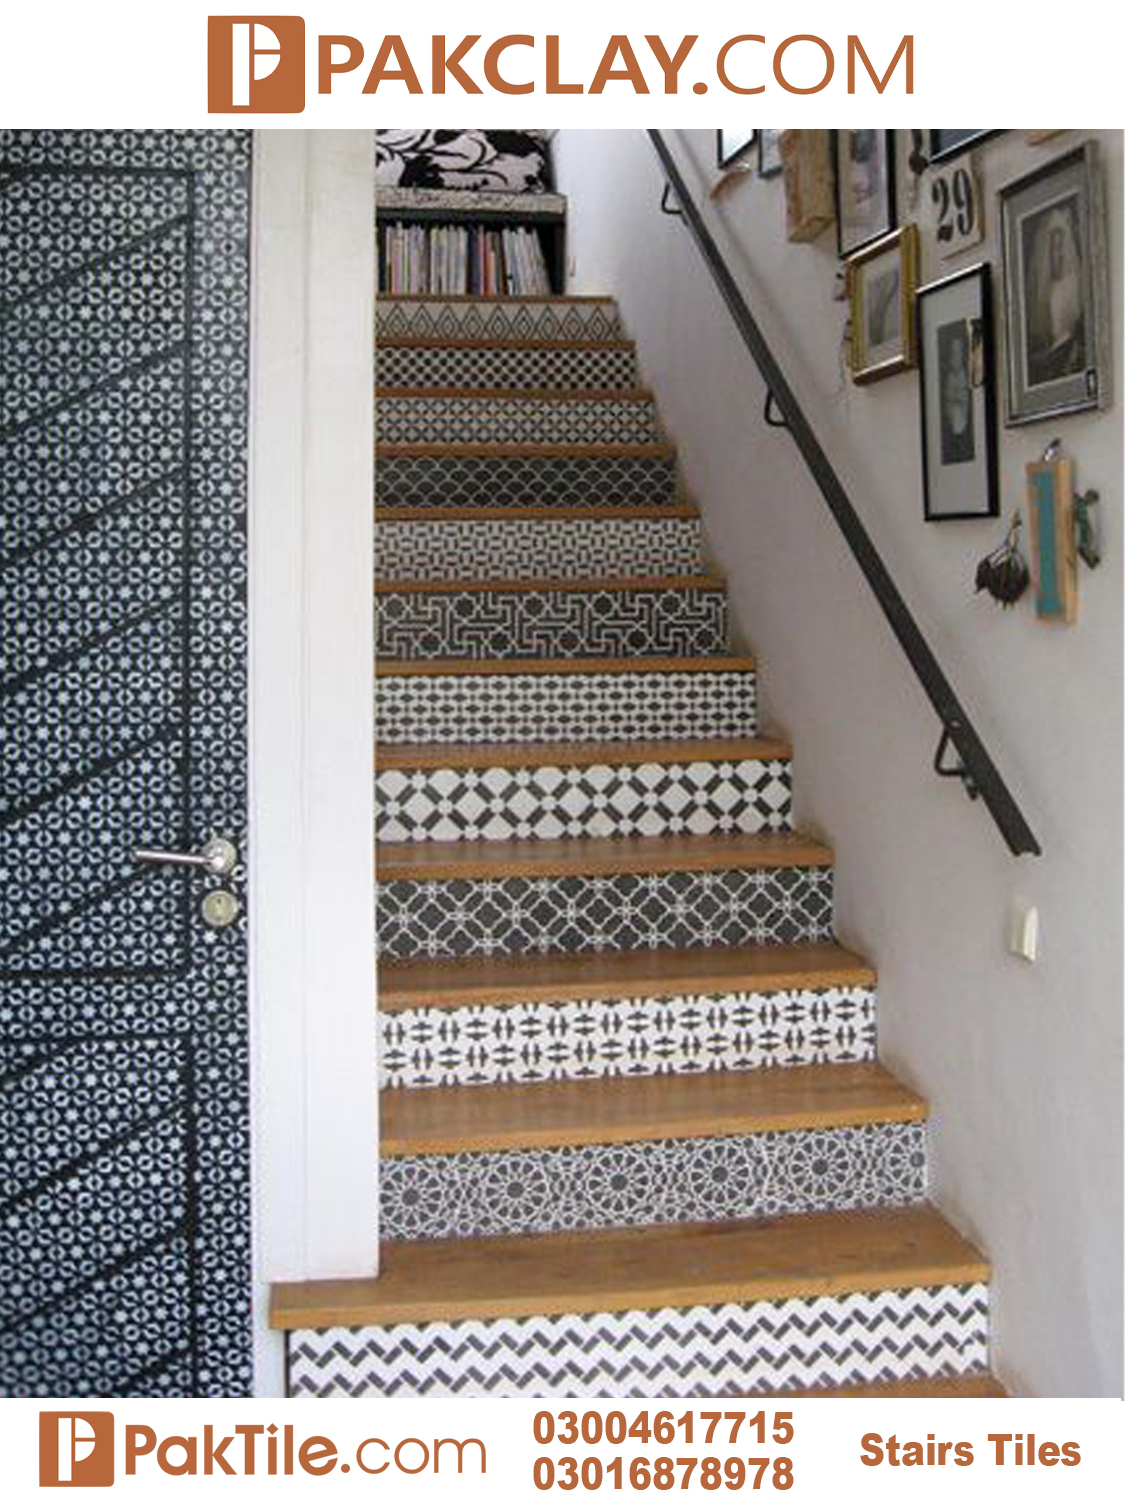 7 Pak Clay Staircase Tiles Design in Karachi